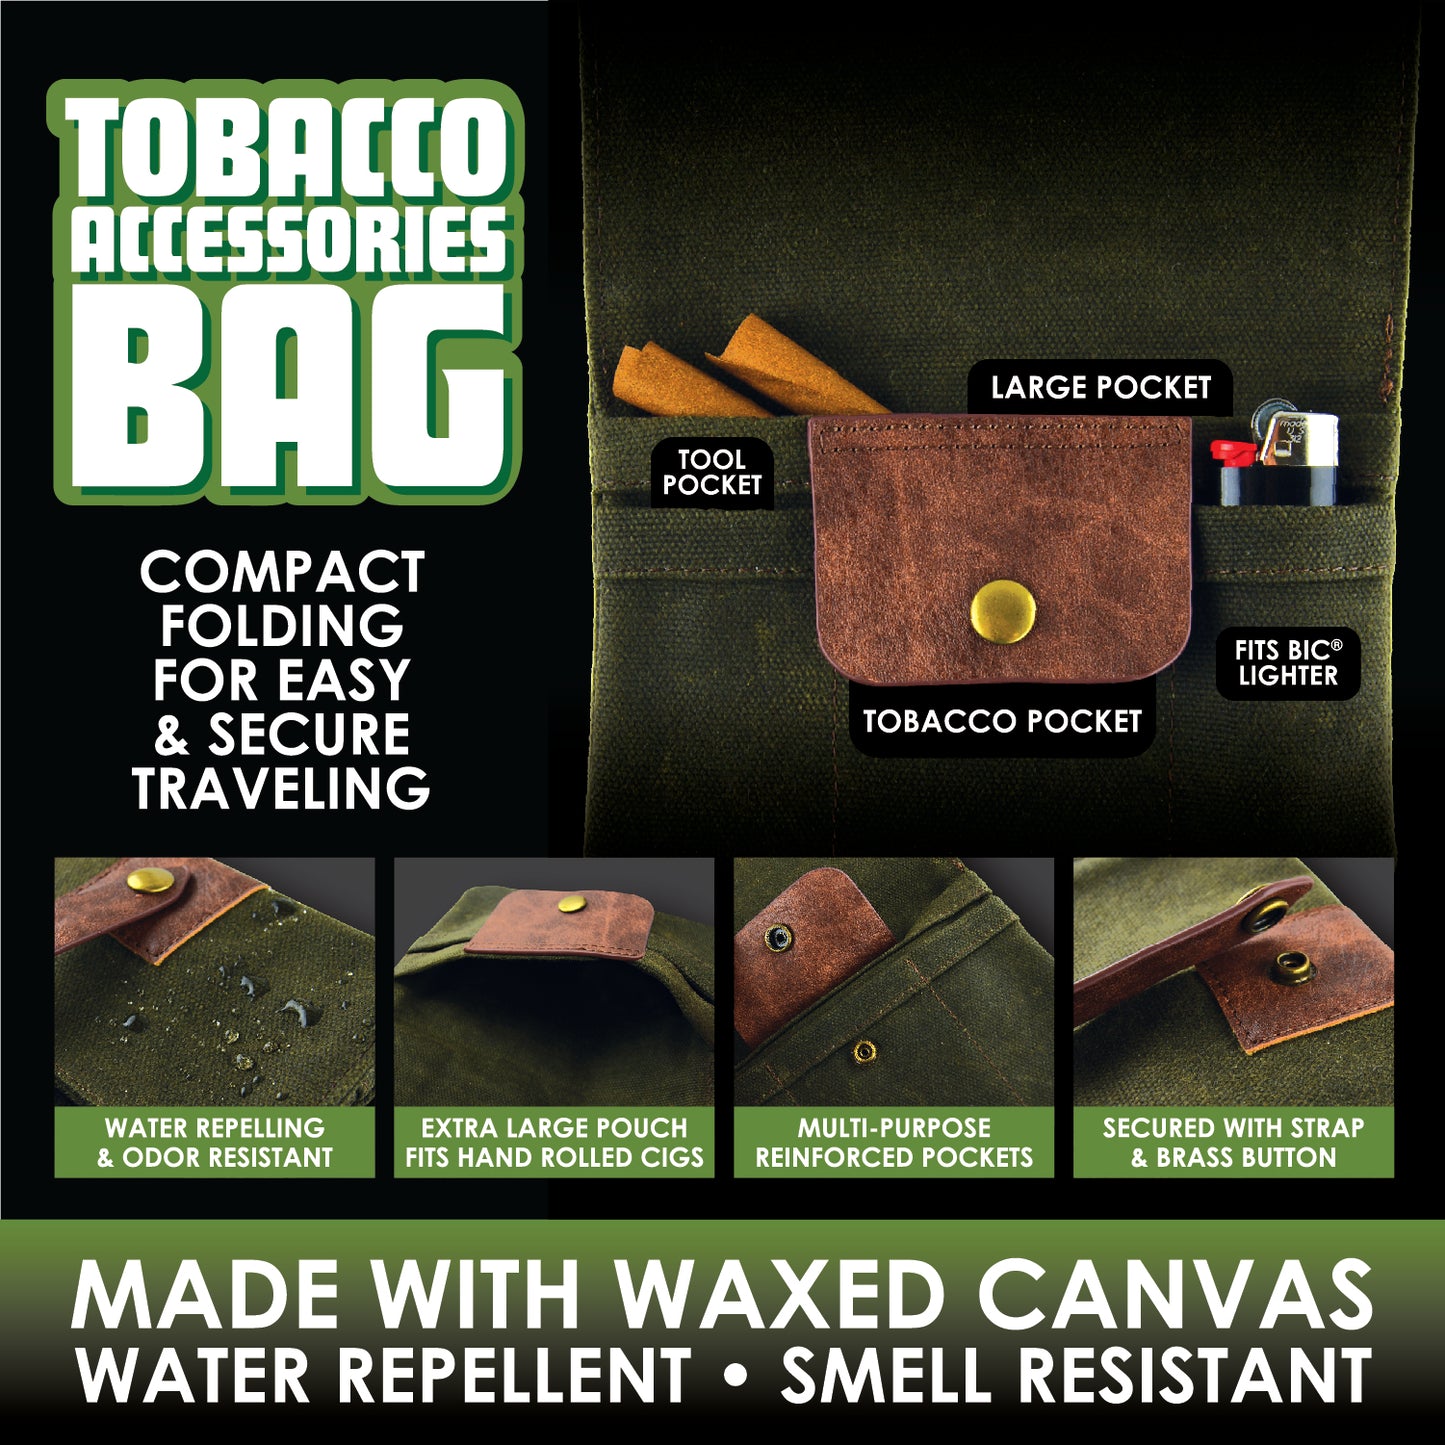 Tobacco Accessories Bag Advertisement